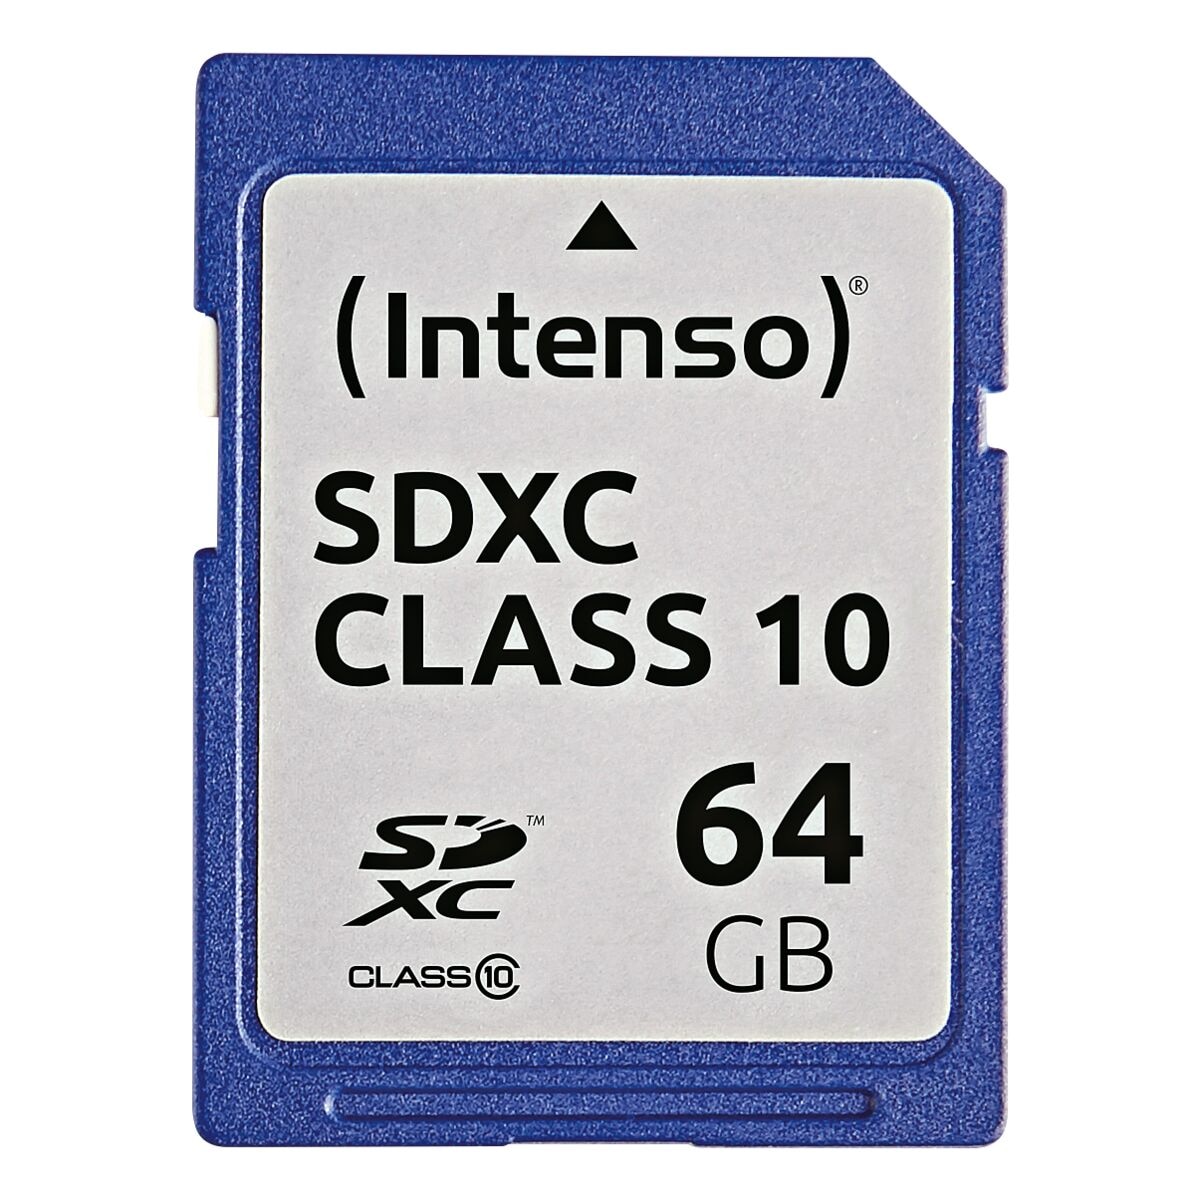 Intenso Carte mmoire SDXC  Intenso Class10 64GB 